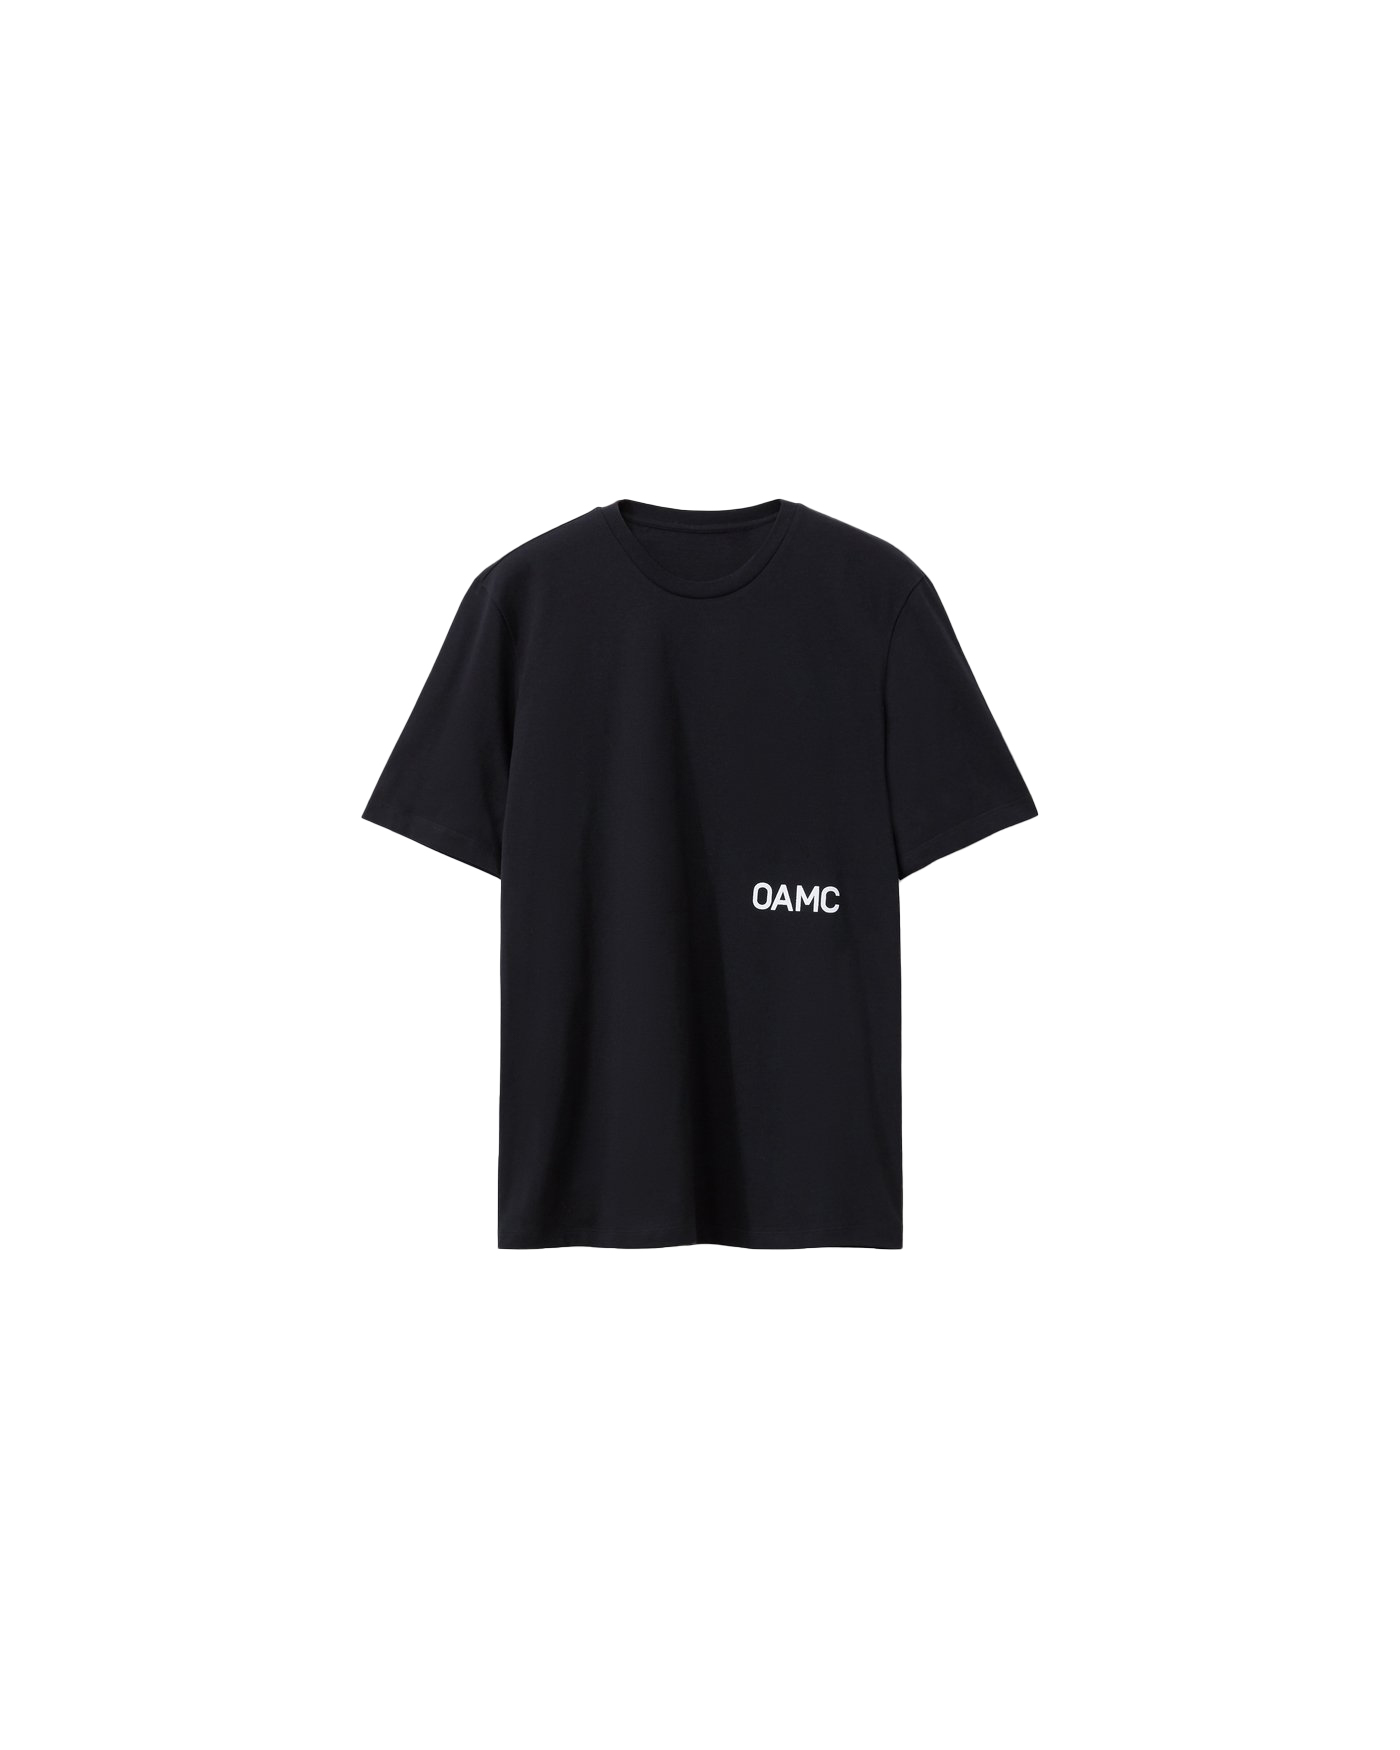 OAMC x Fragment T-shirt Black - SS20